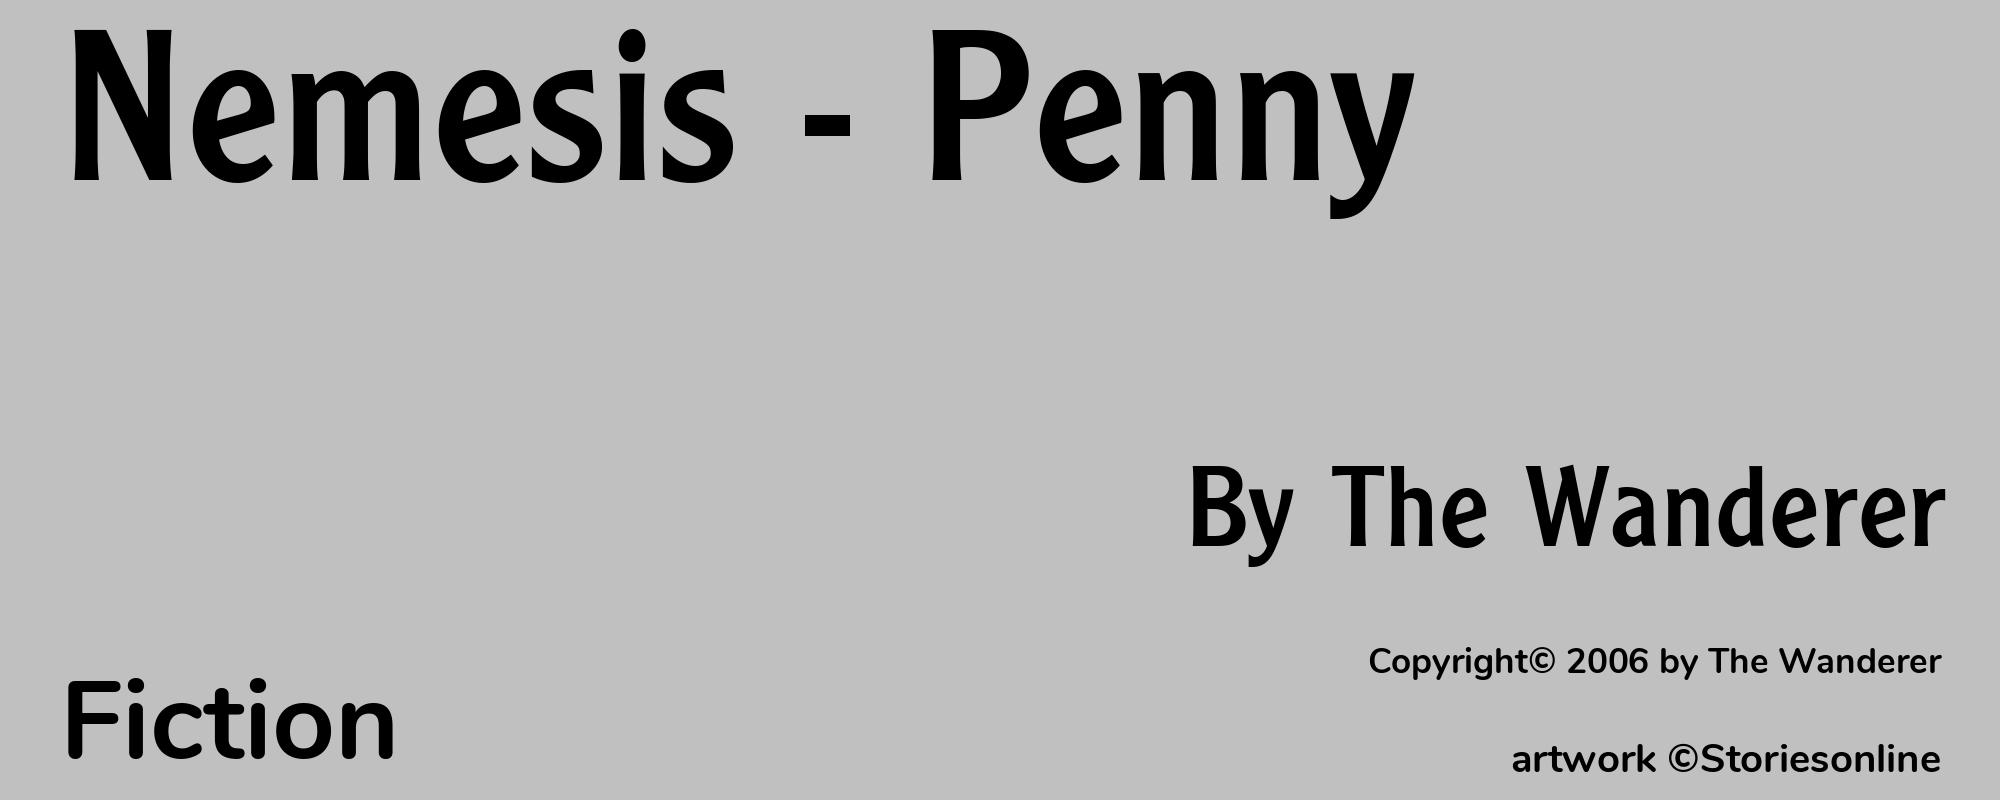 Nemesis - Penny - Cover